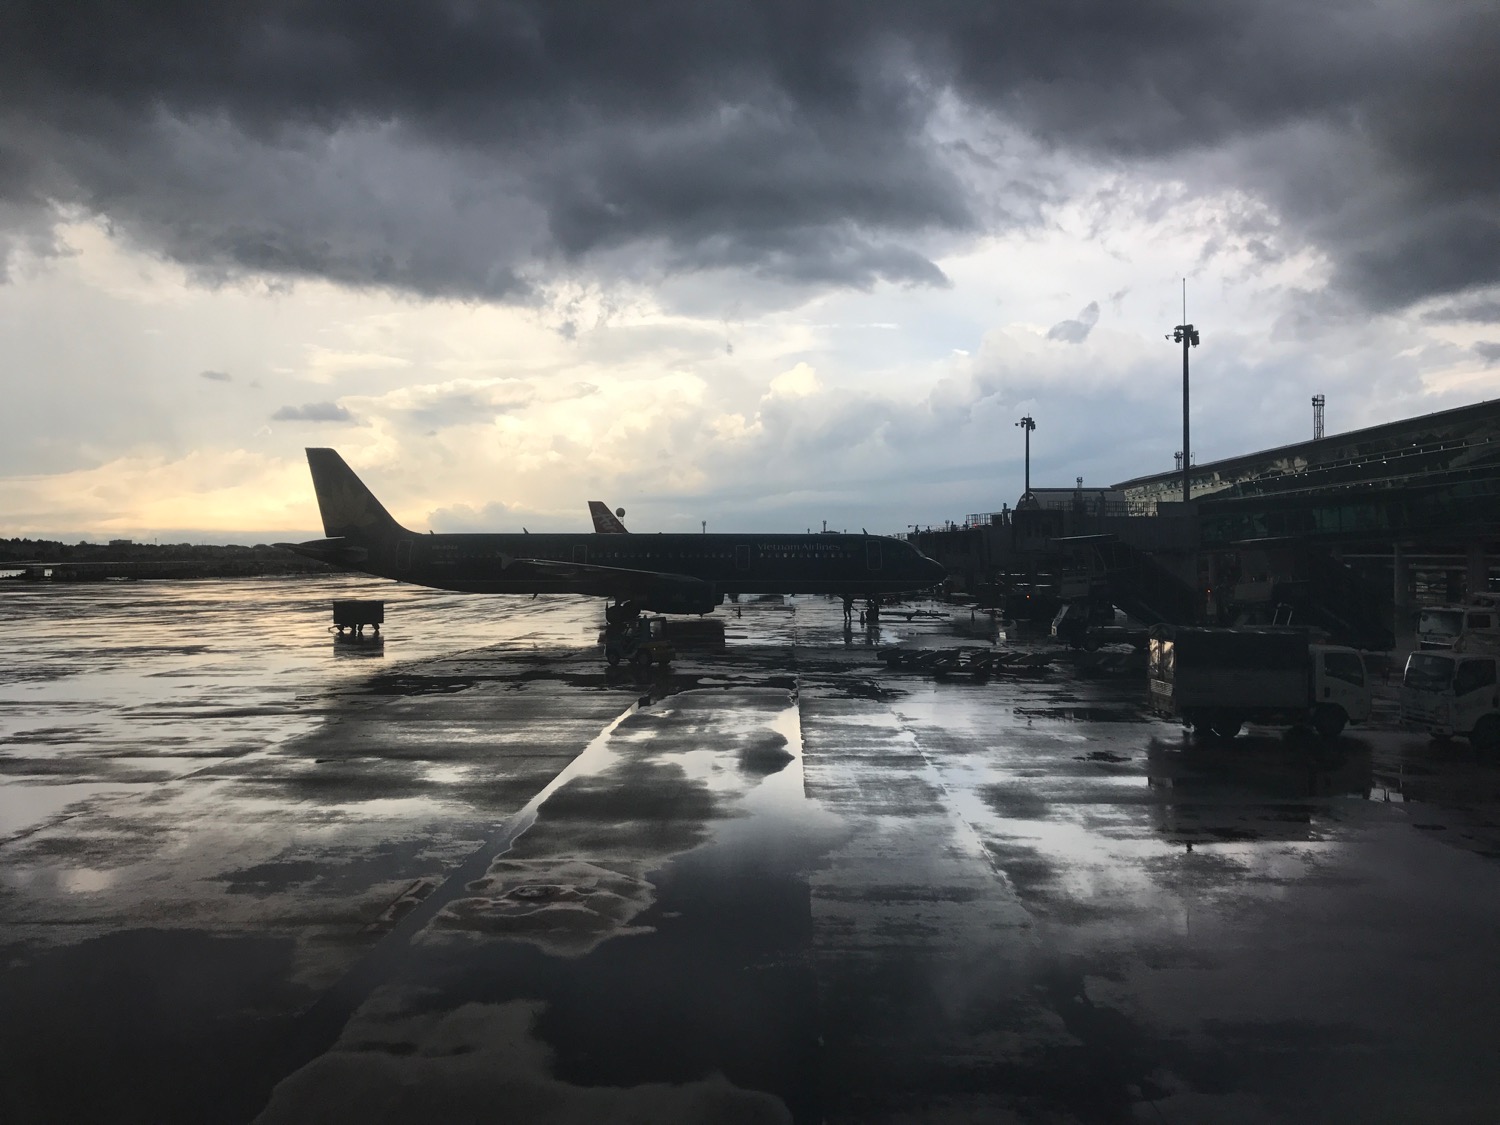 Vietnam Airlines Aborted Landing